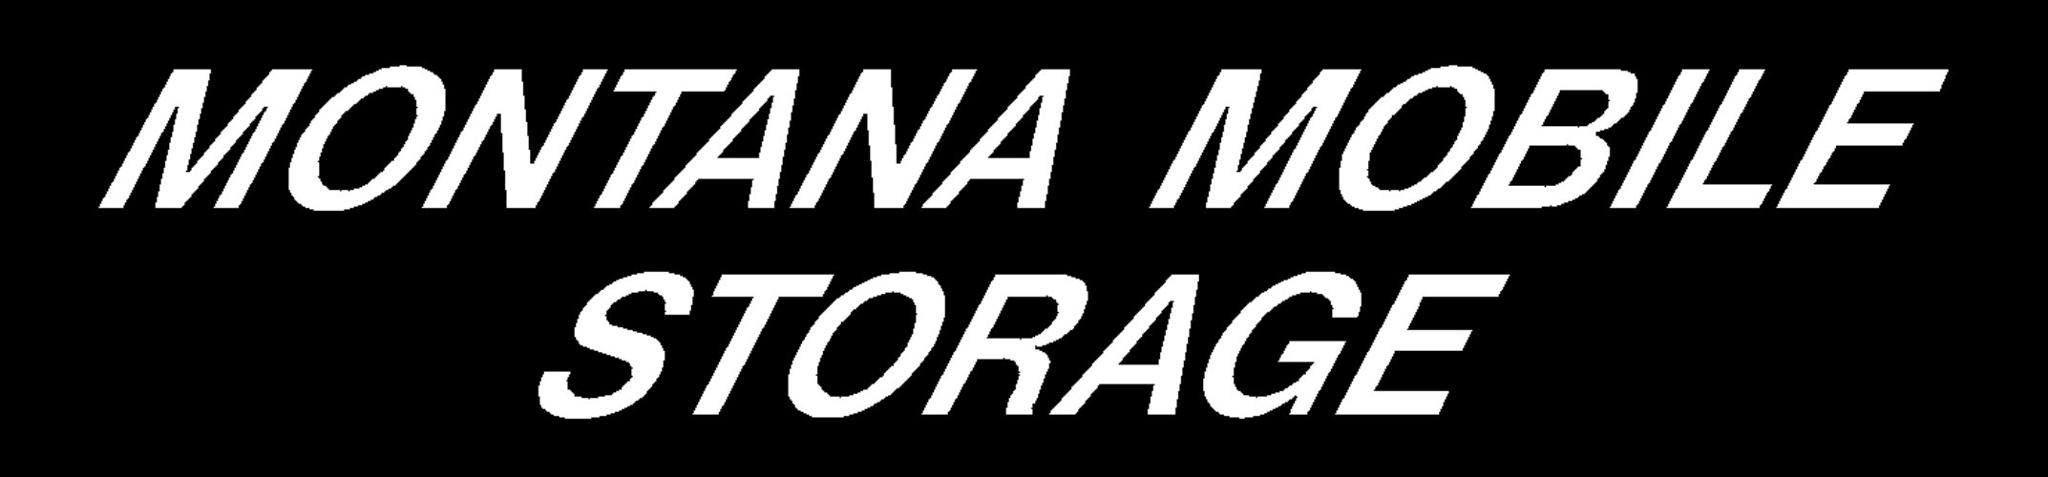 Montana Mobile Storage Inc